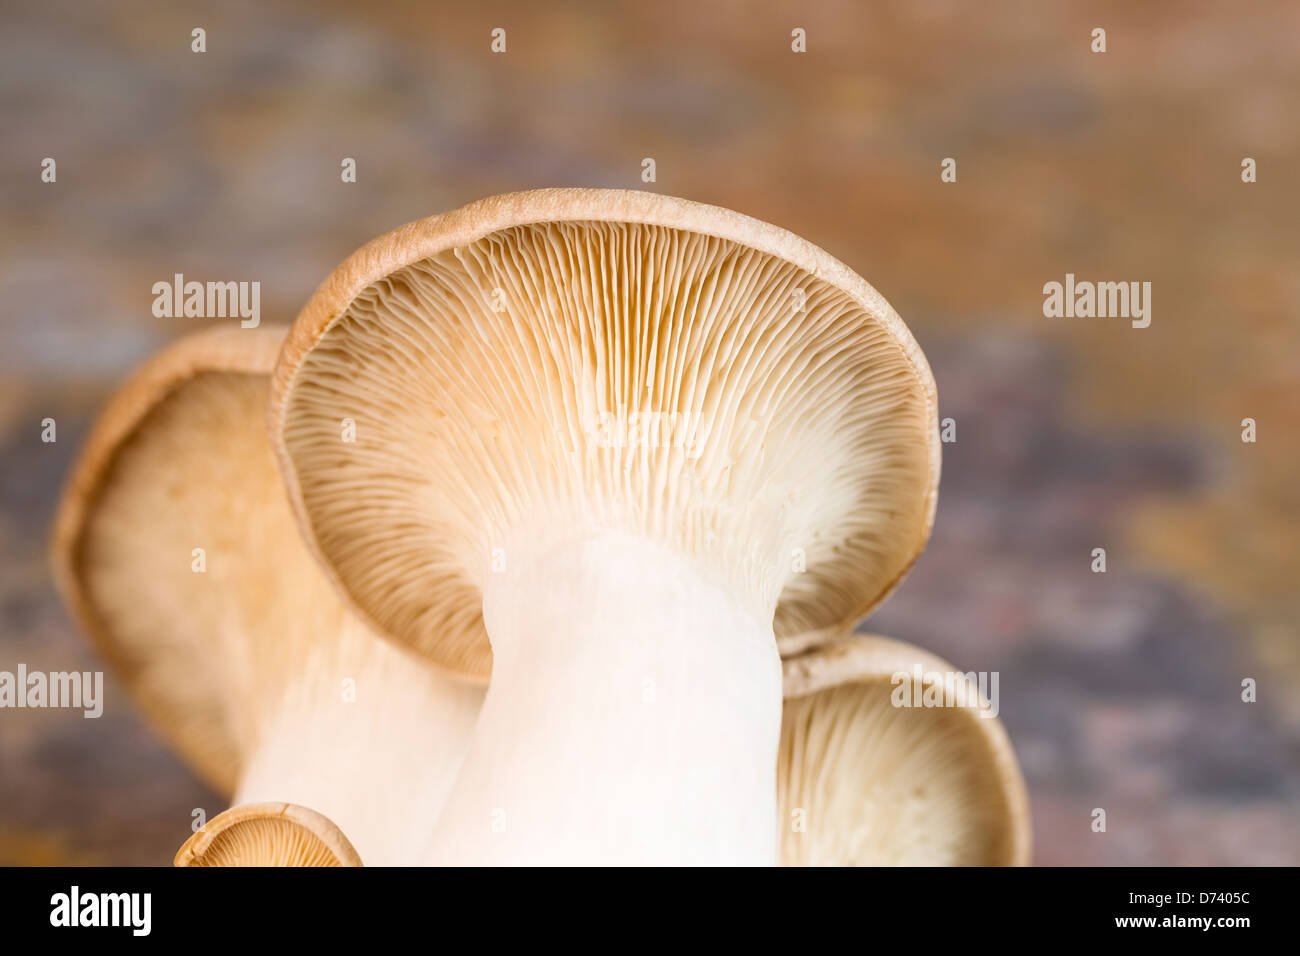 Horizontal photo of underneath a fresh king trumpet mushroom on natural stone background Stock Photo